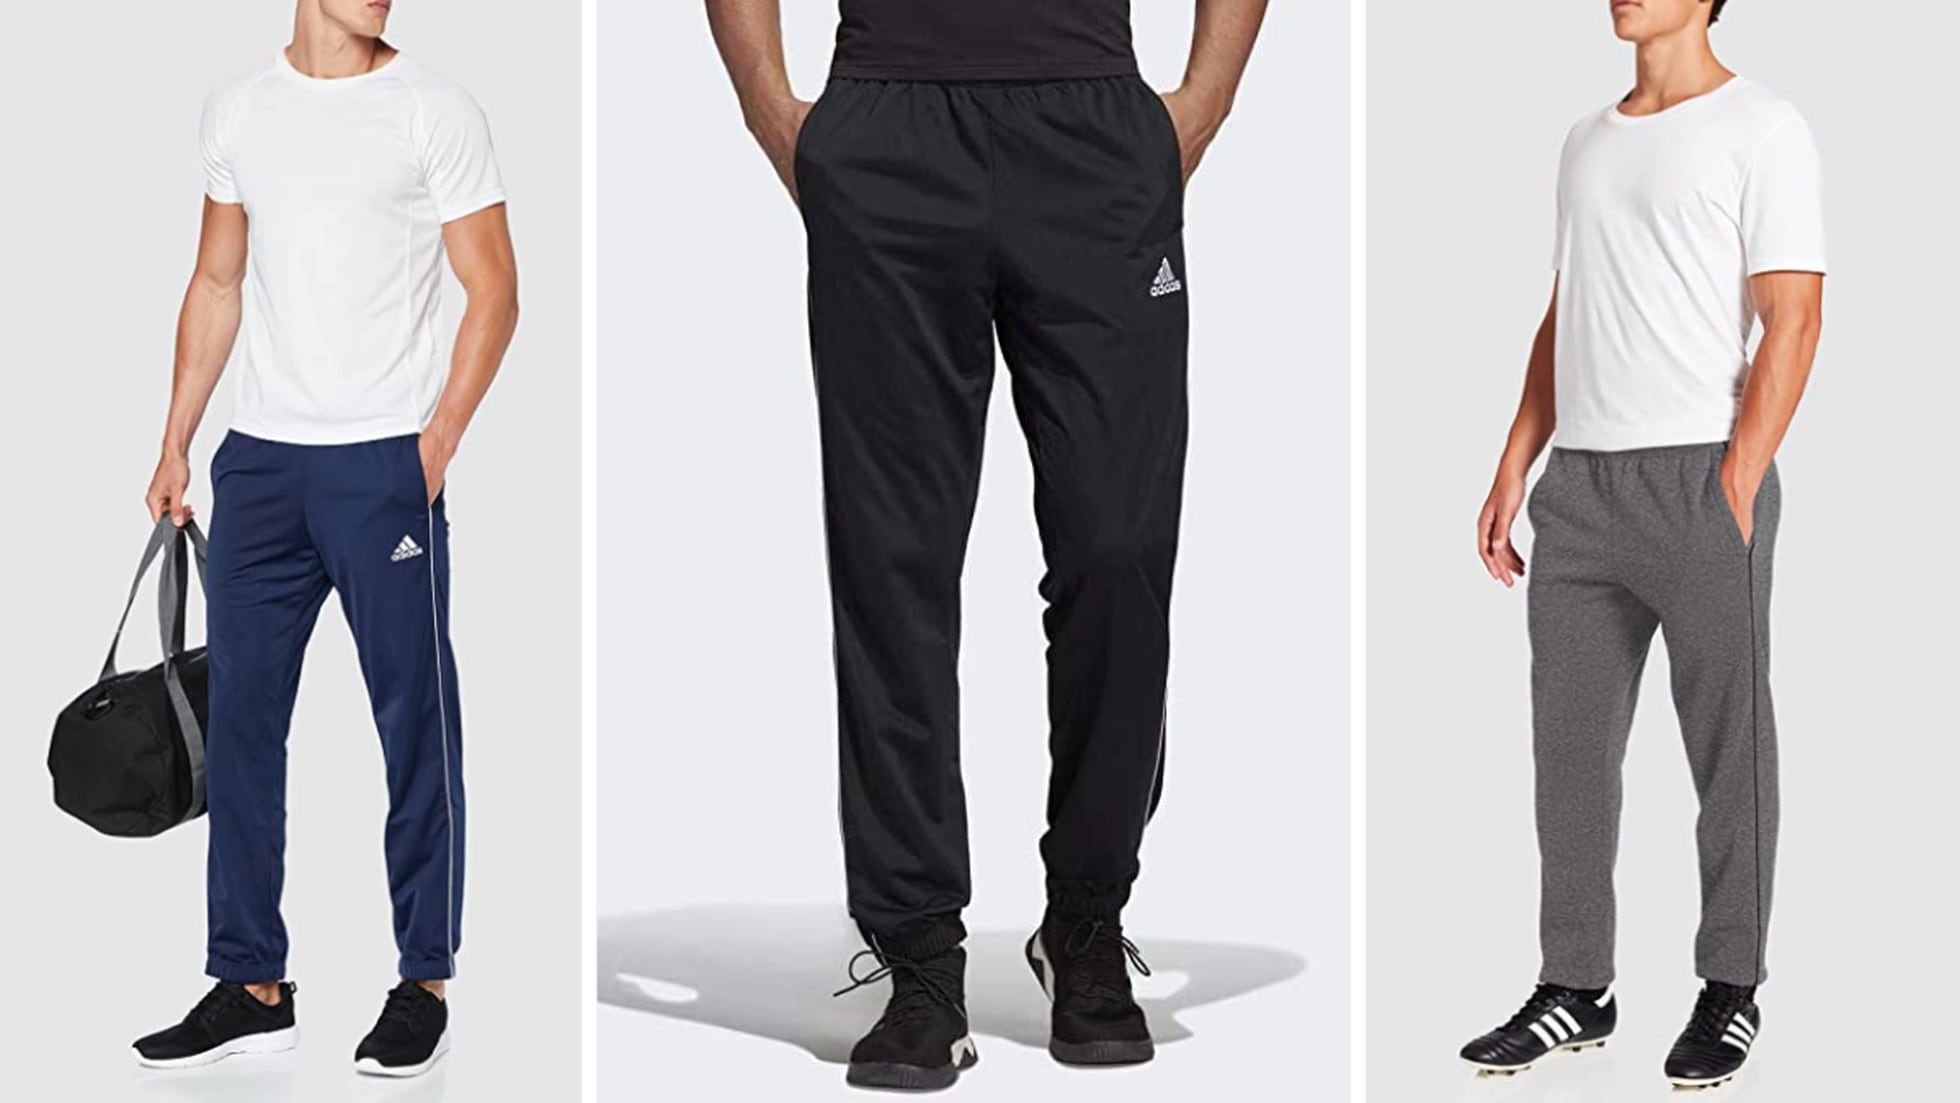 Pantalones Largos Para Hombre De Chándal Casual Moda De Algodón Gimnasio  Deporte